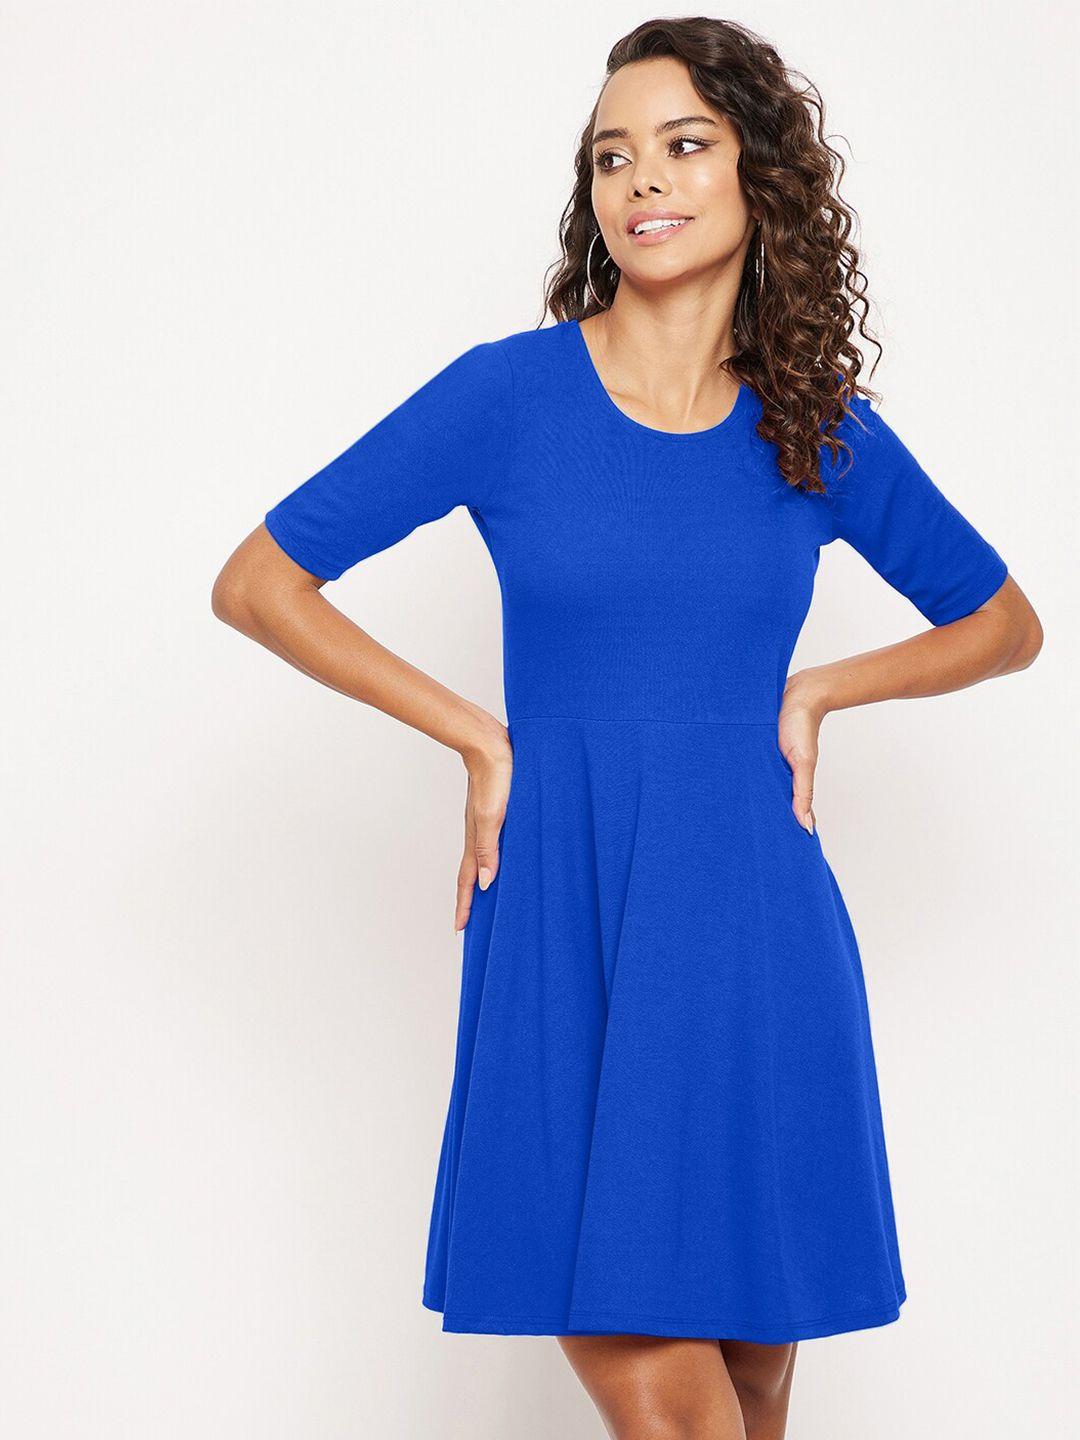 uptownie lite blue solid fit & flare dress